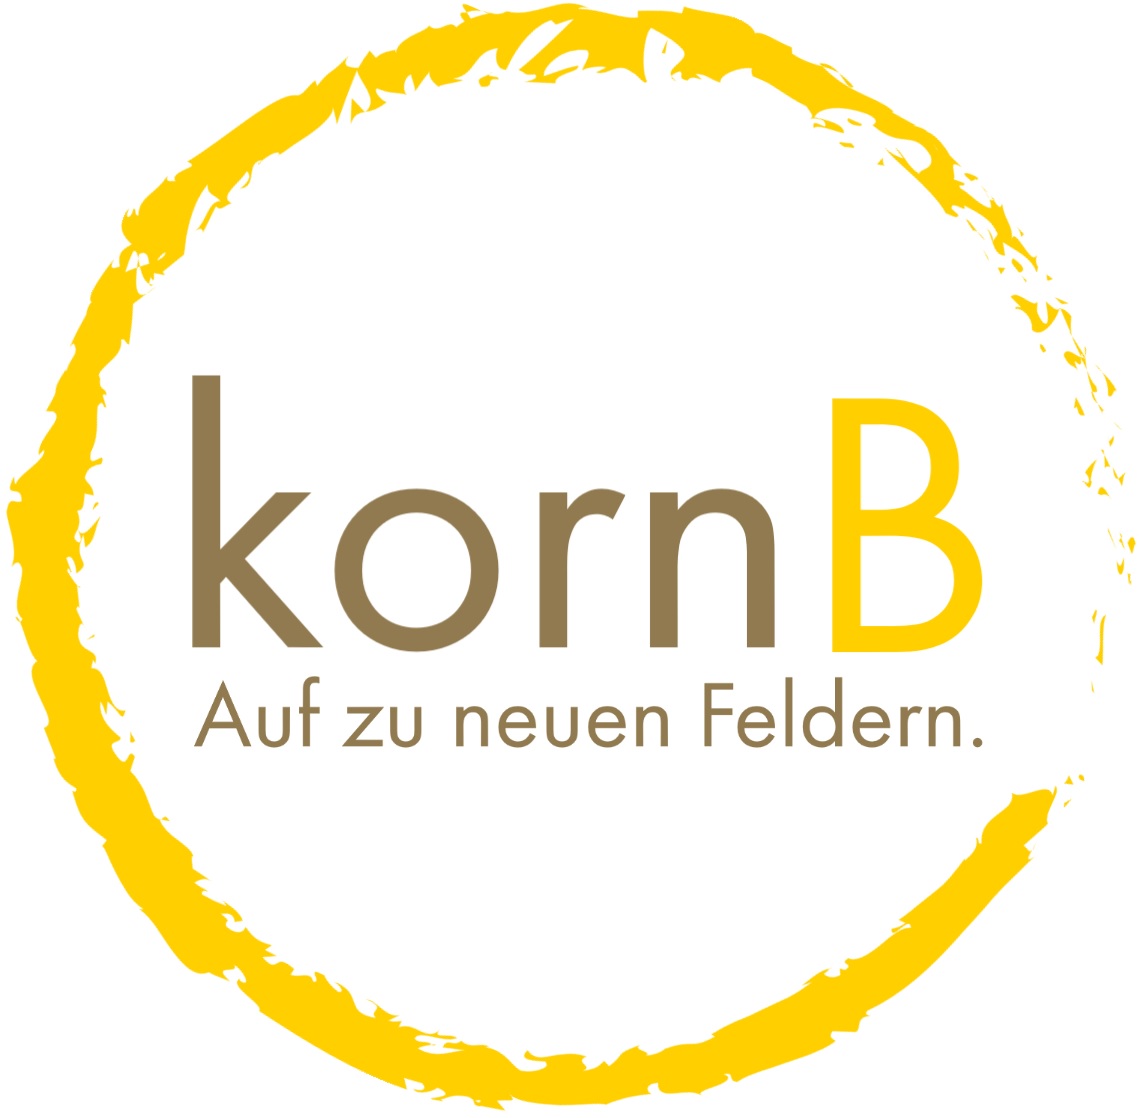 KornB Logo mit Claim